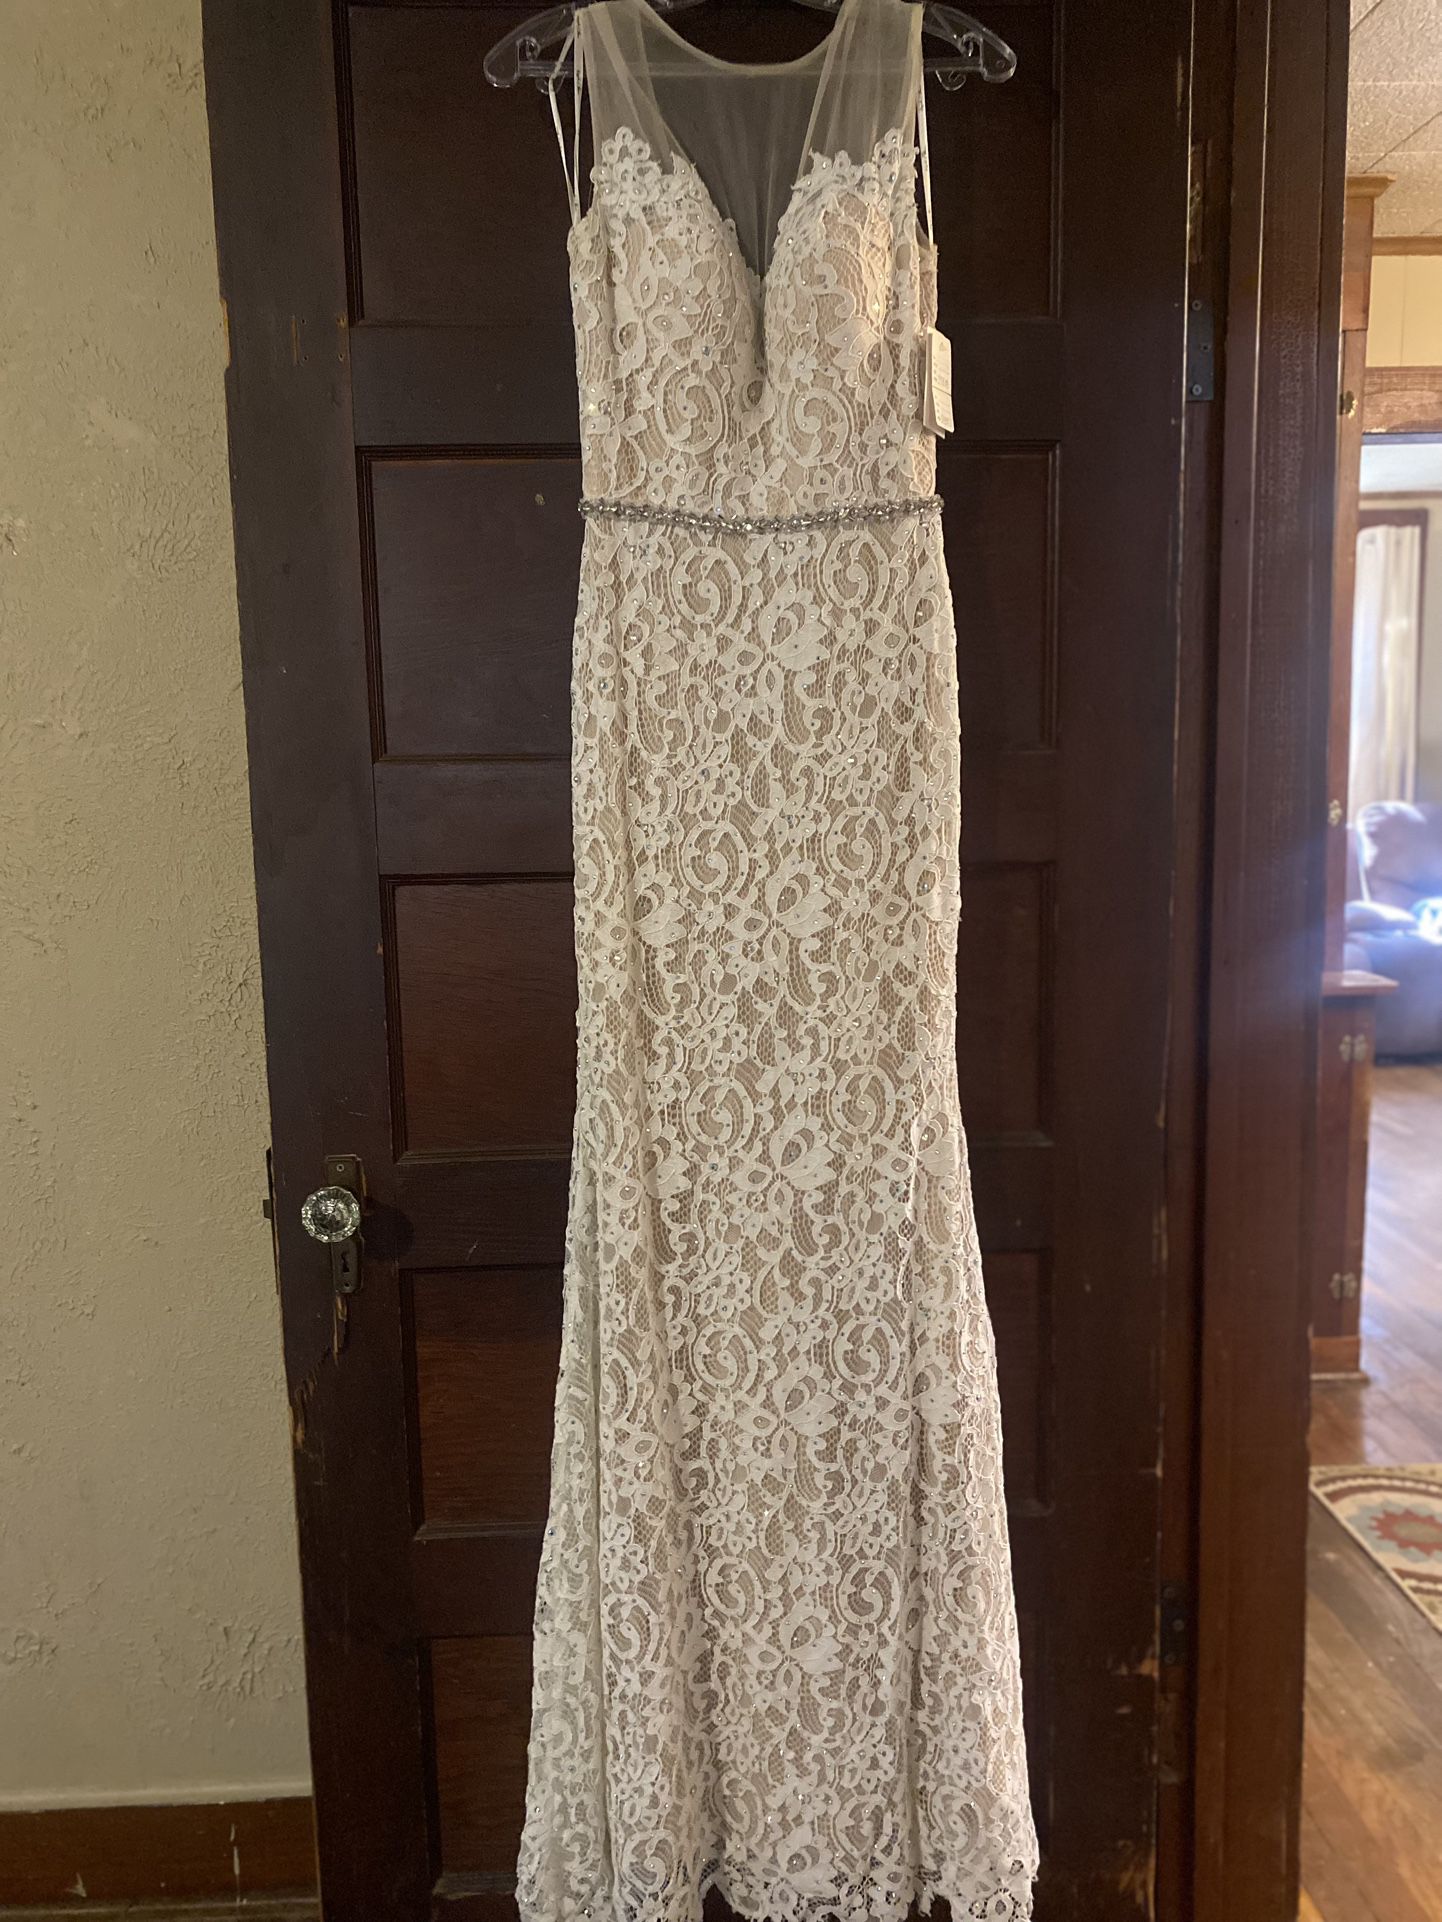 Wedding Dress/ Woman’s Dress Size 4